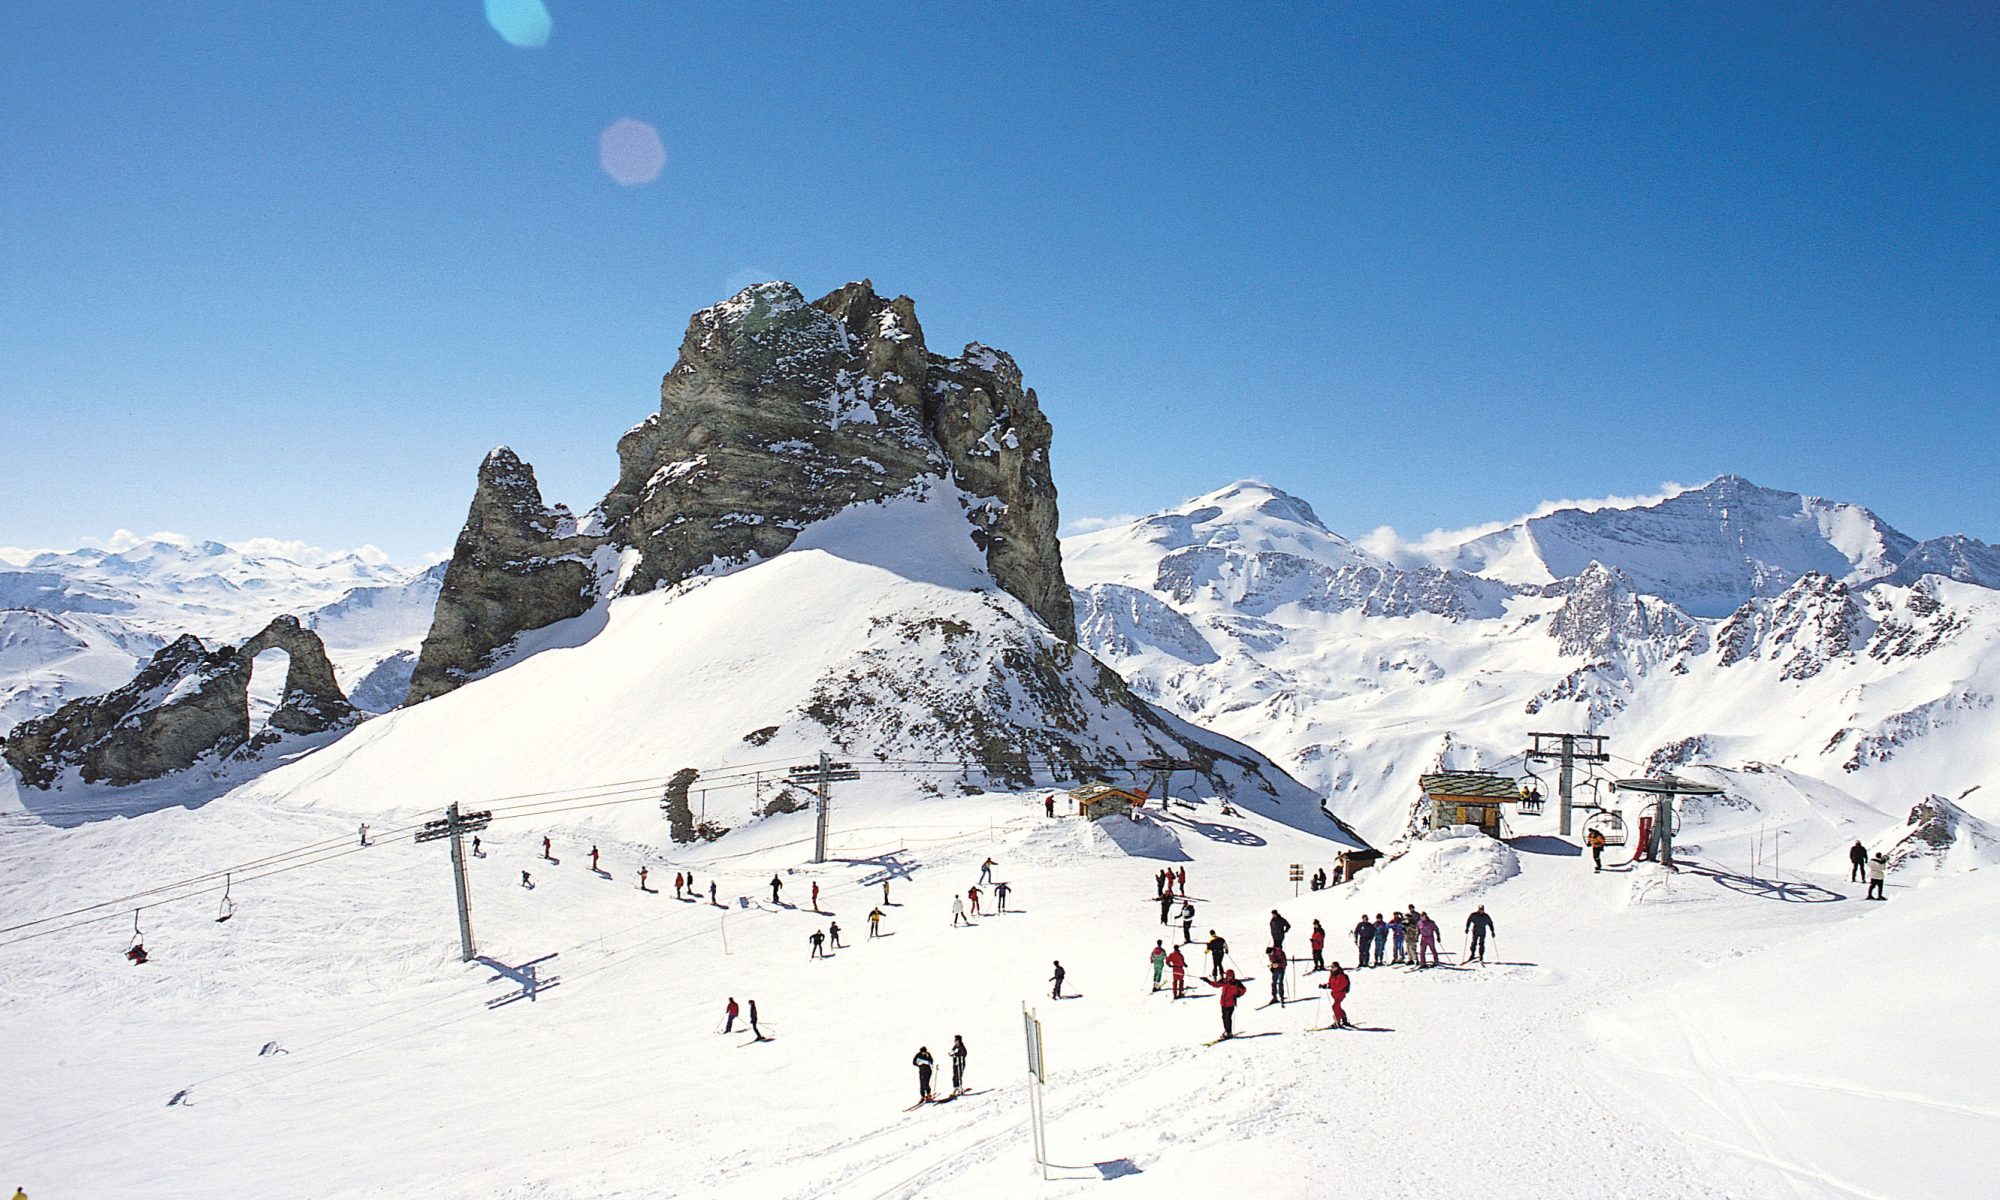 Tignes resort, where British Skier John Bromell was seen last time alive.